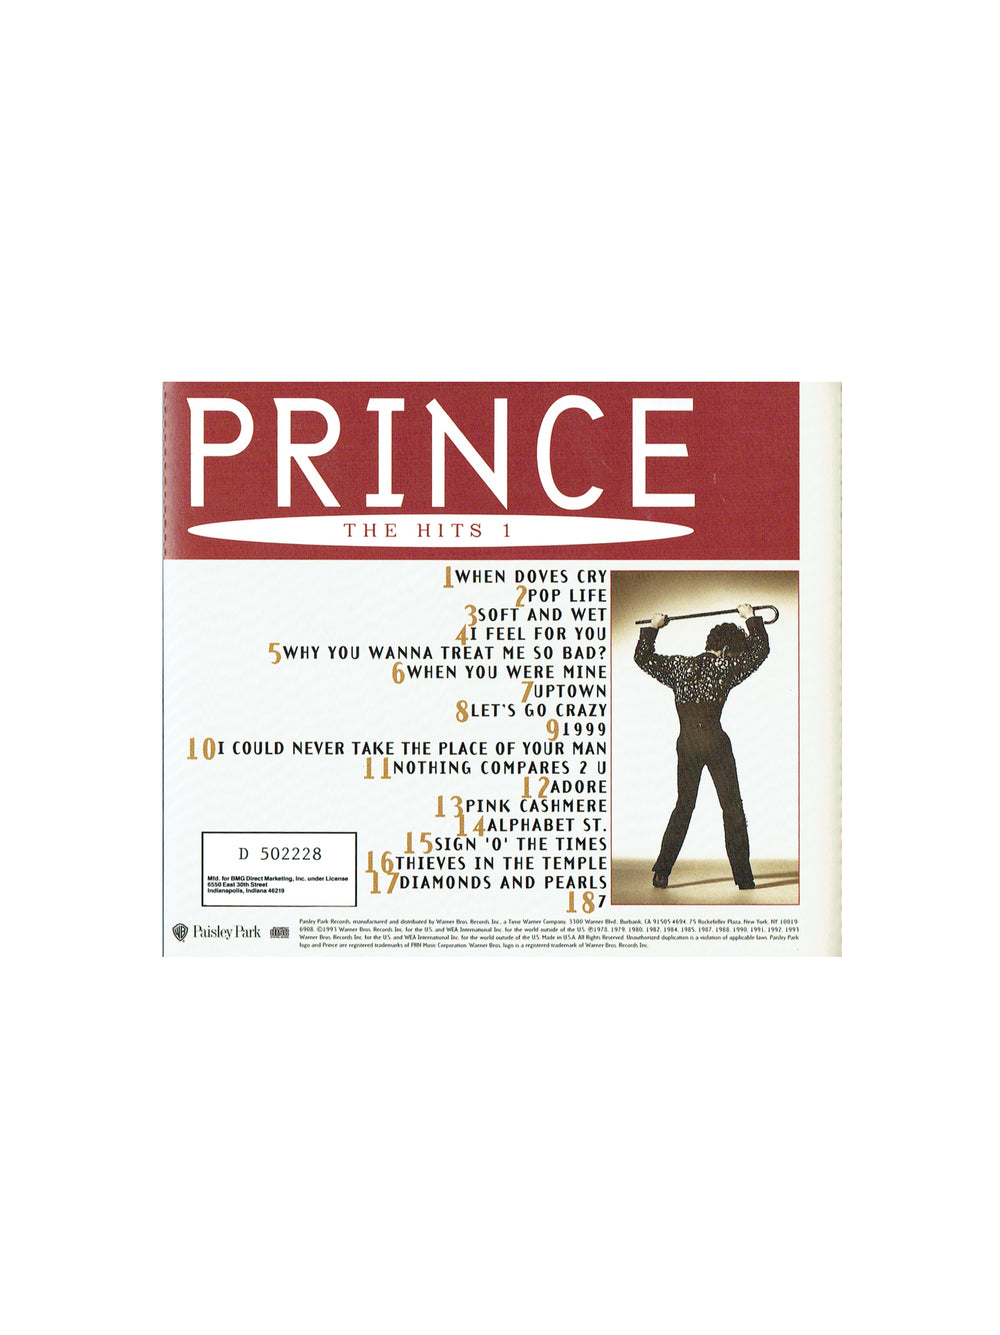 Prince – The Hits CD Album US Preloved: 1993